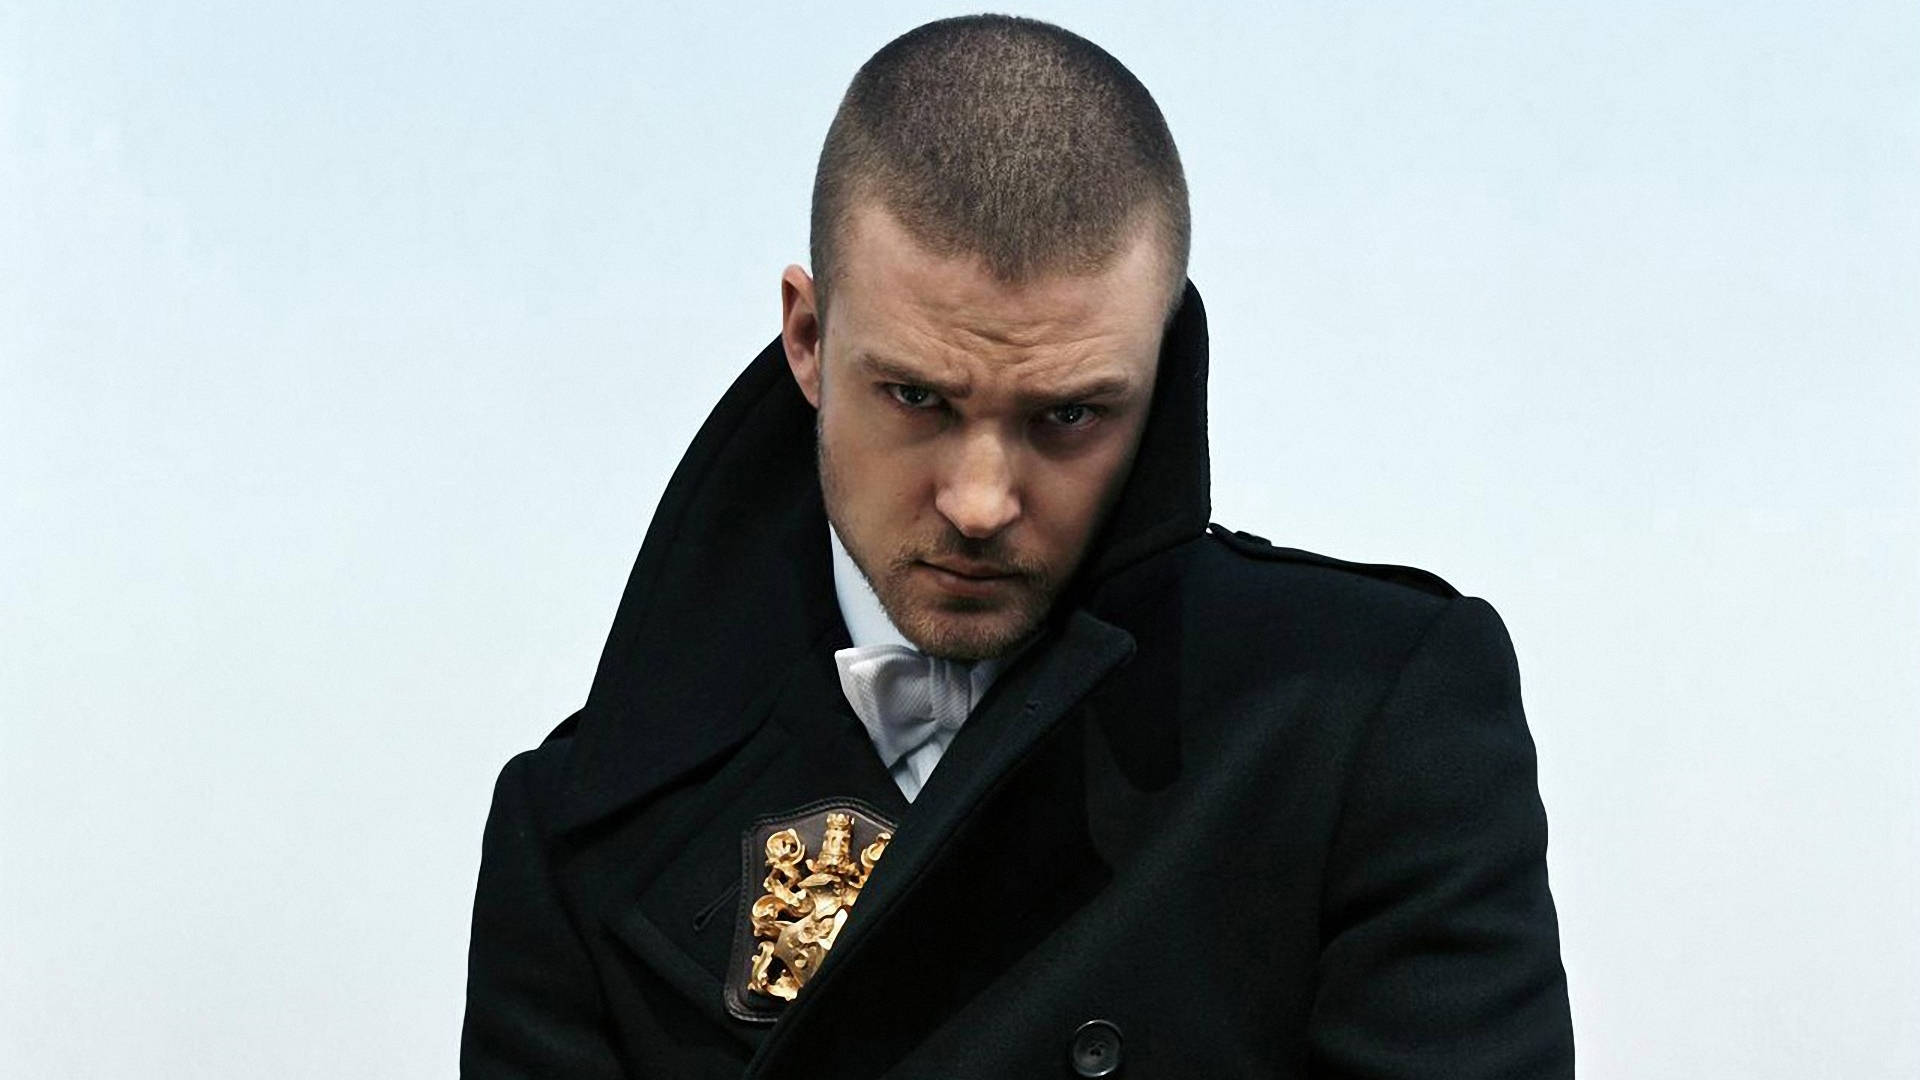 Justin Timberlake In Black Tench Coat Wallpaper